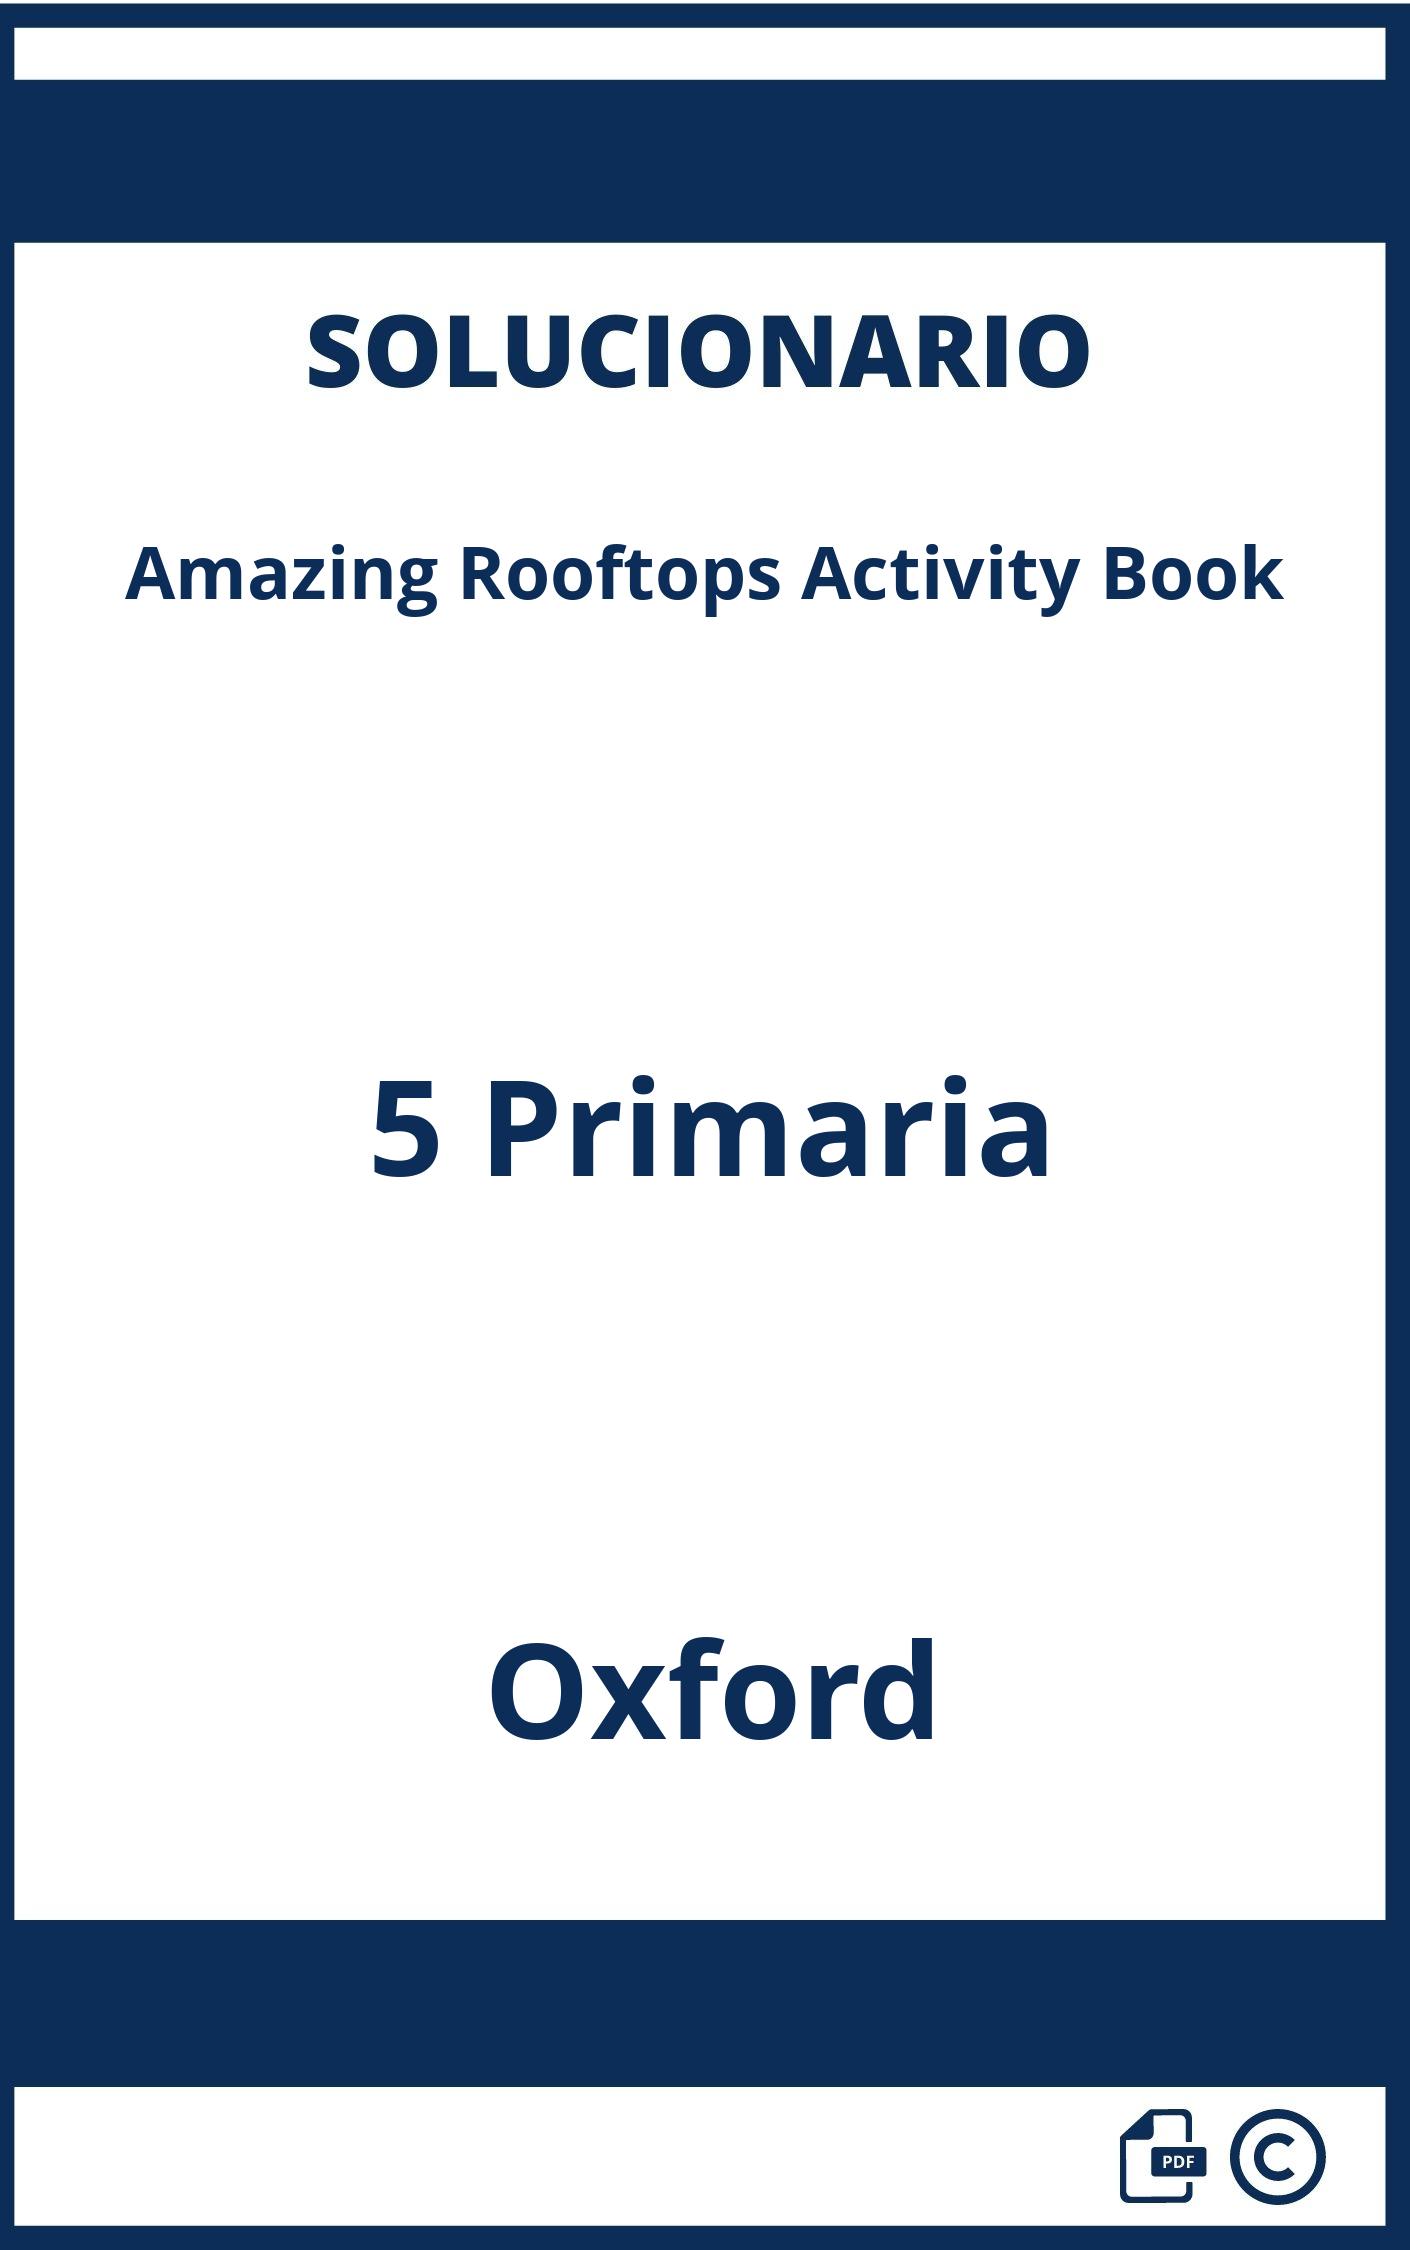 Solucionario Amazing Rooftops Activity Book 5 Primaria Oxford